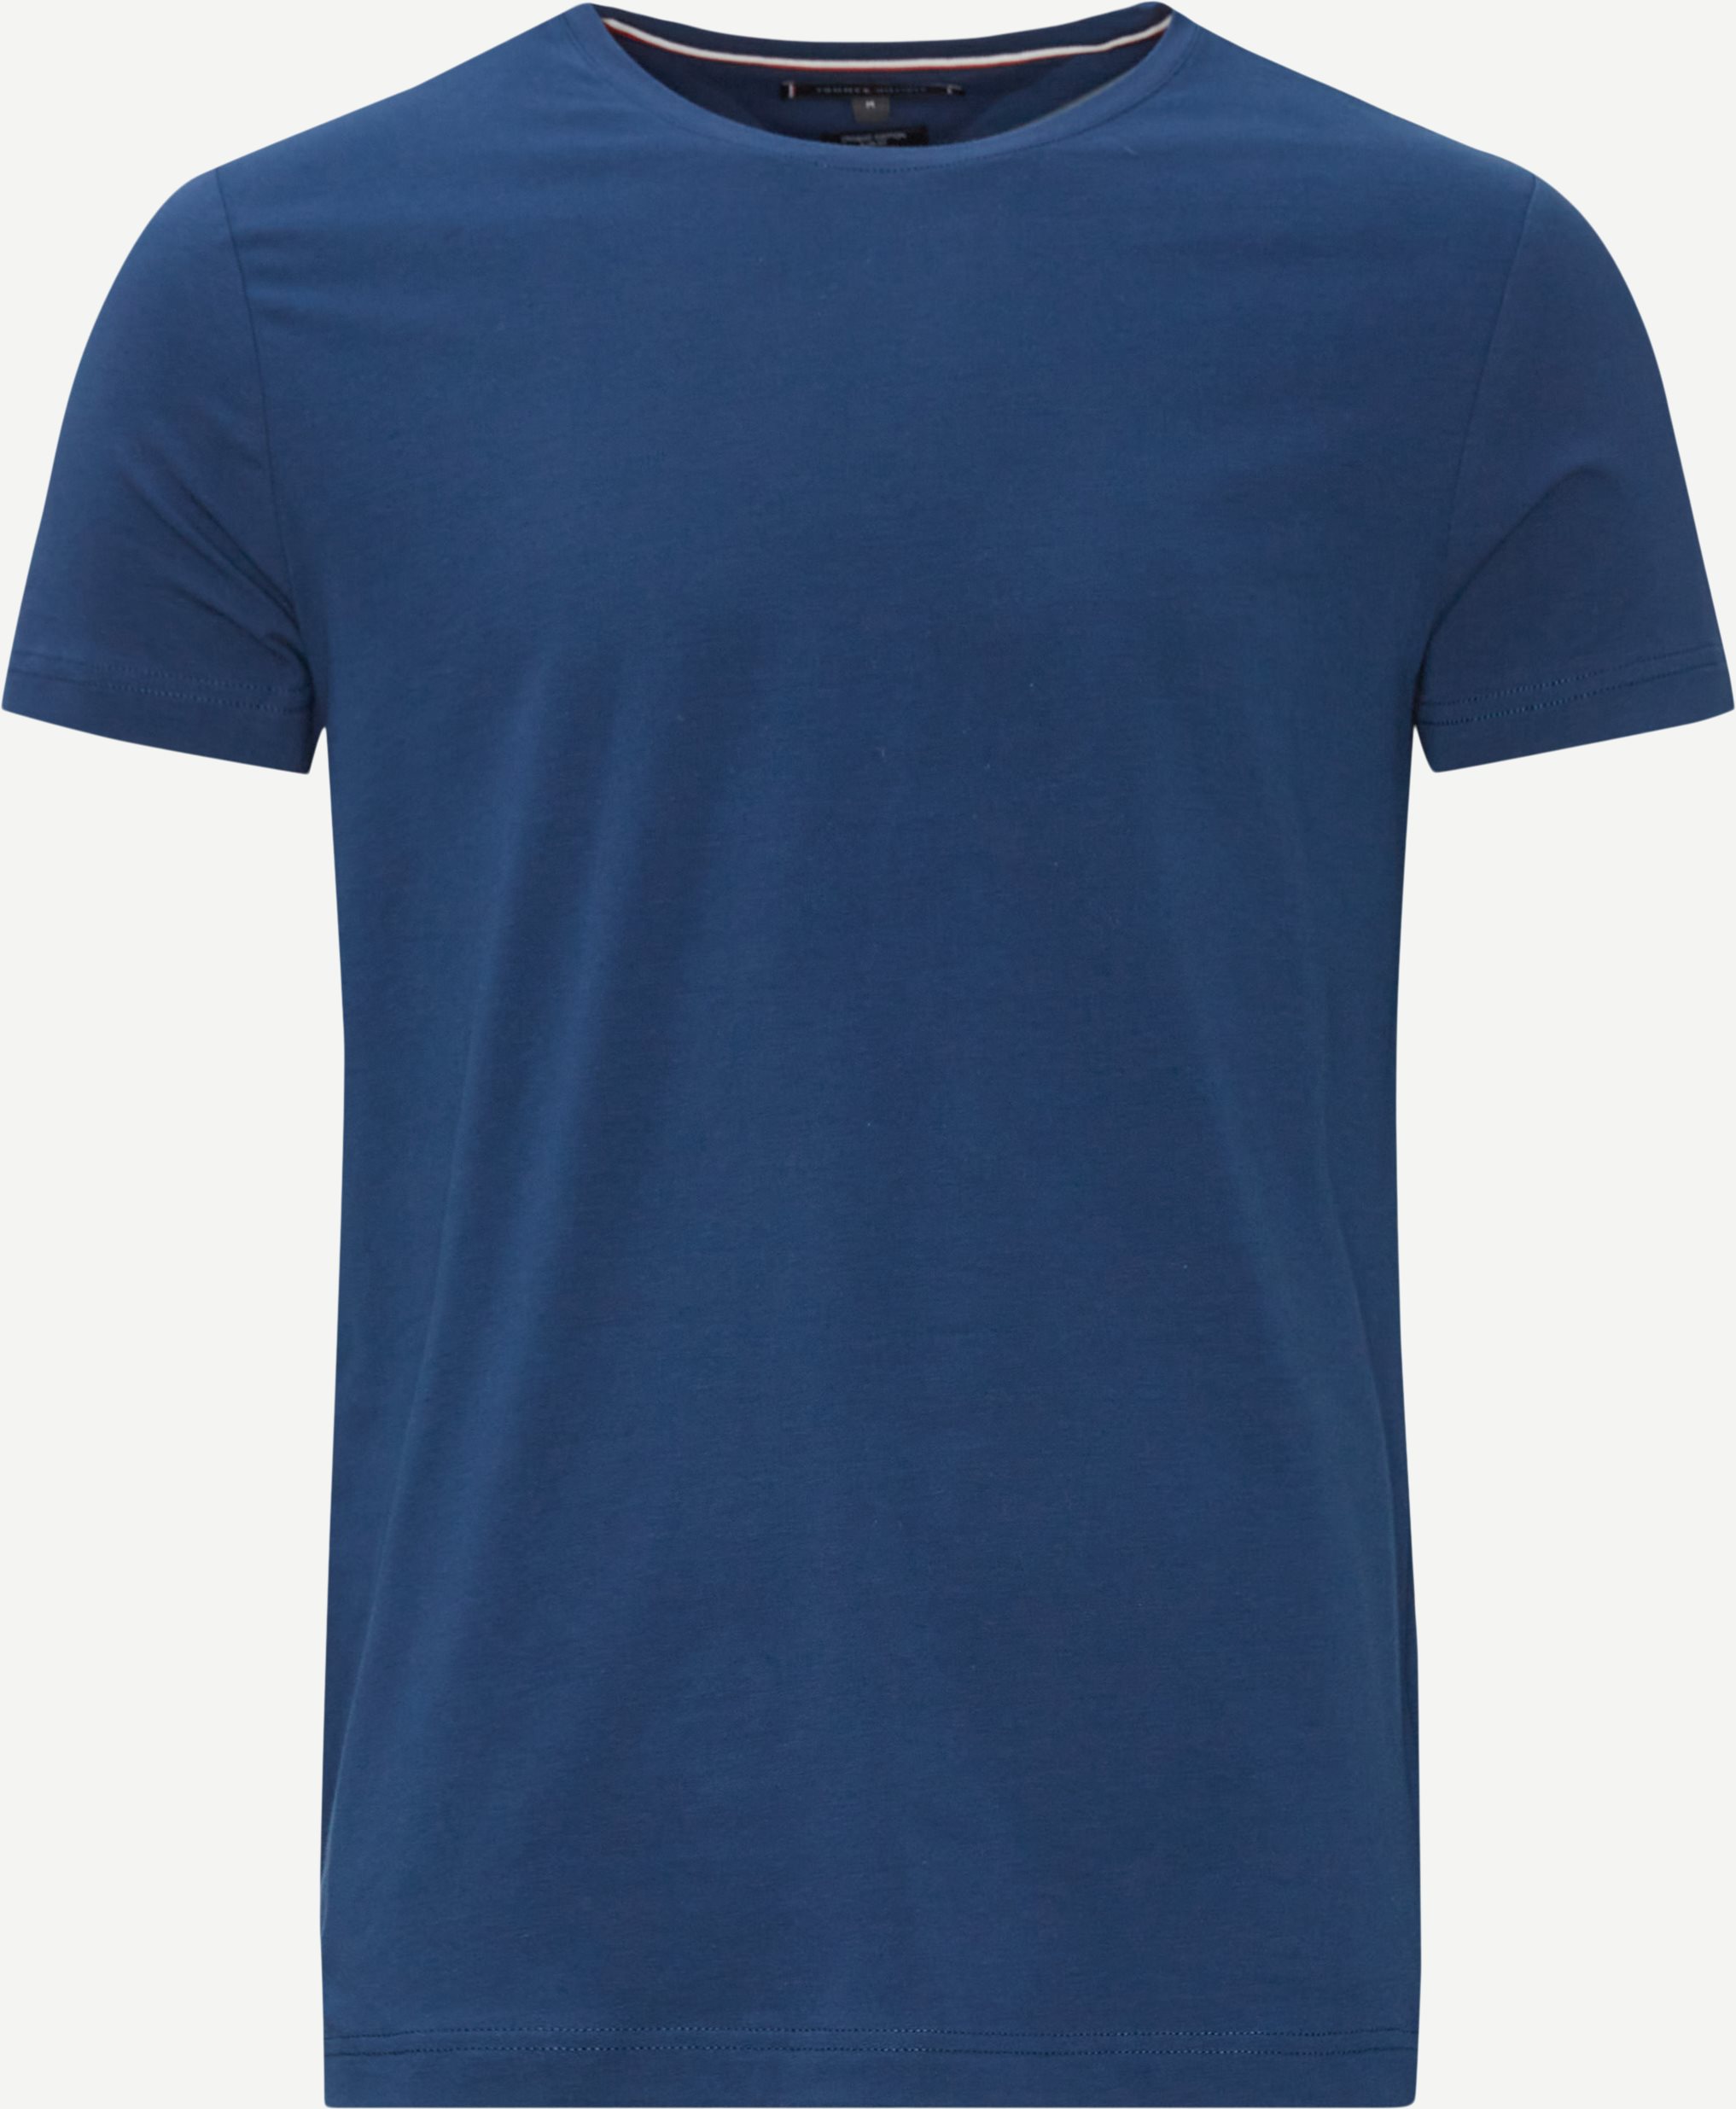 Blue T-shirts